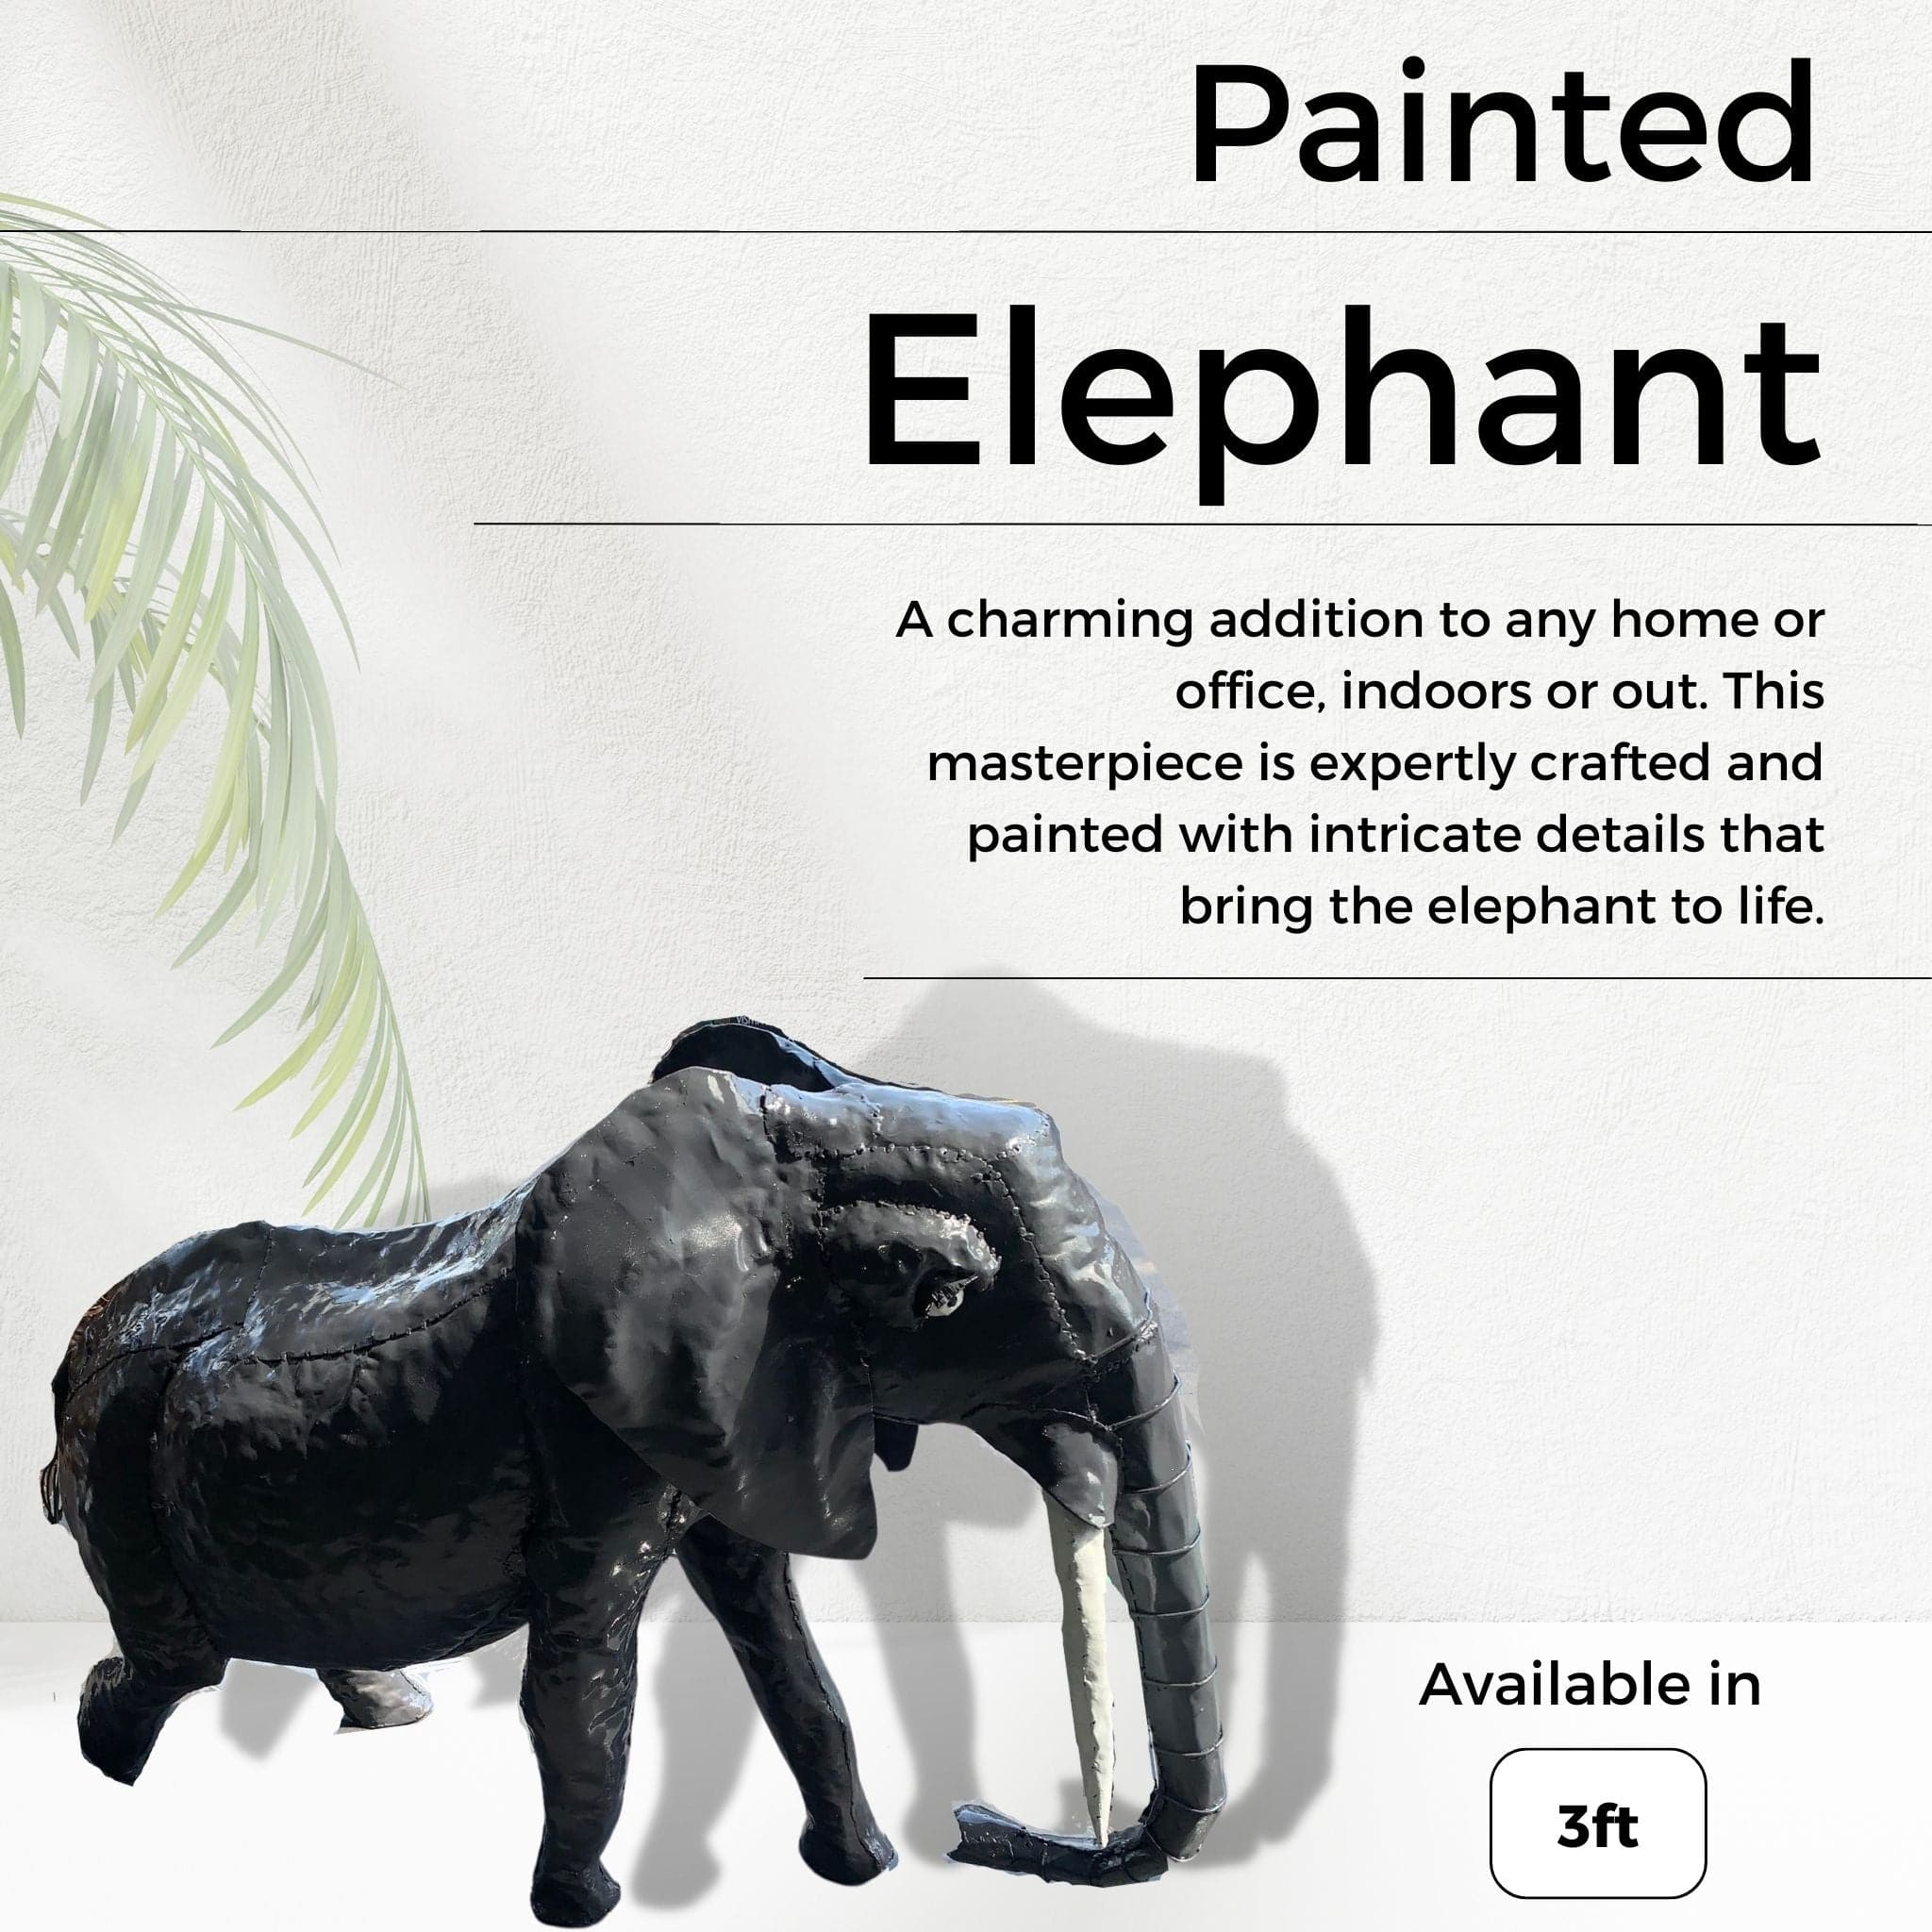 Painted Elephant - Pangea Sculptures